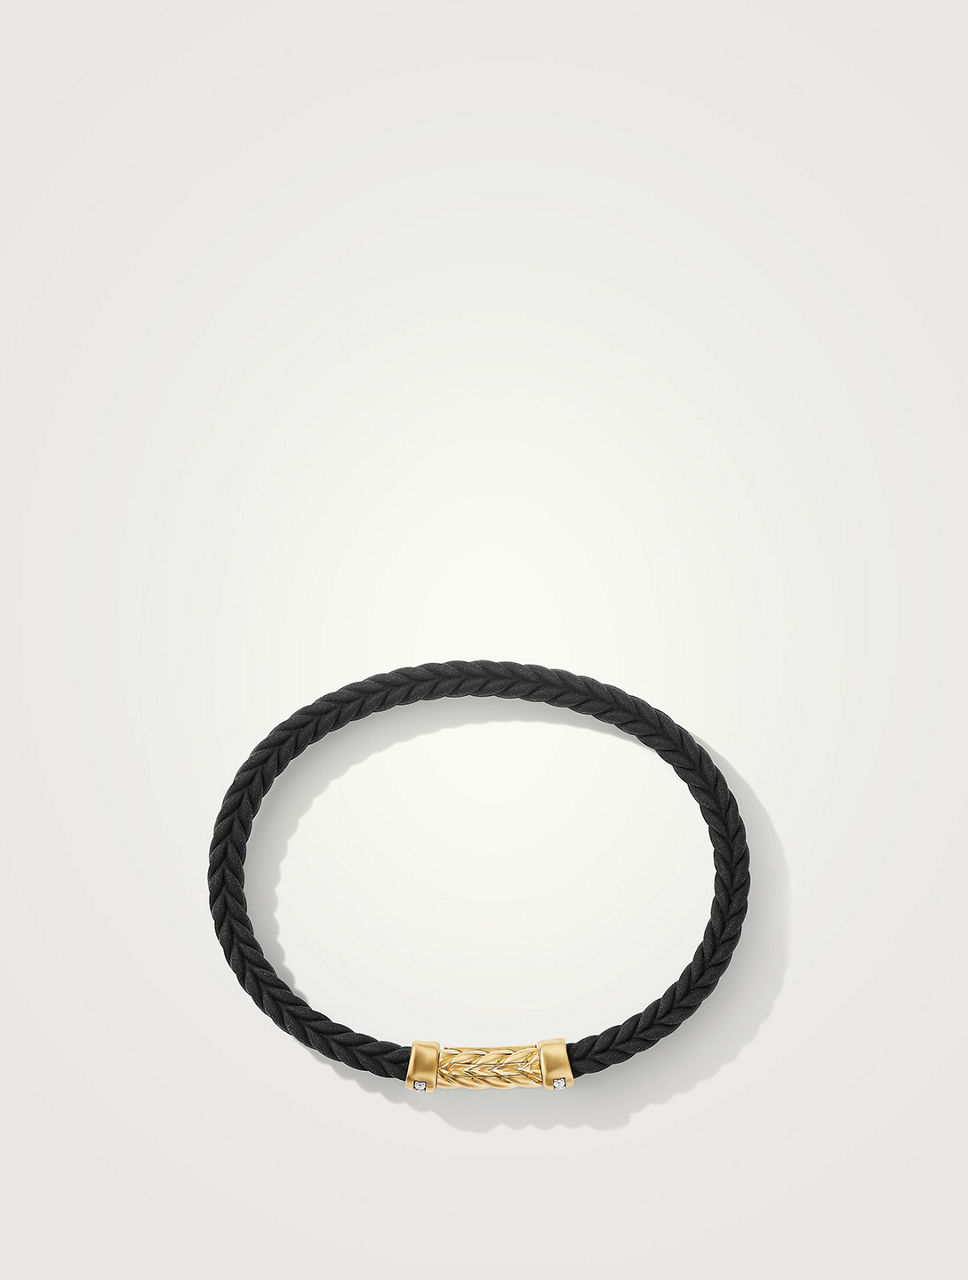 Chevron Black Rubber Bracelet With 18k Yellow Gold And Pavé Diamonds